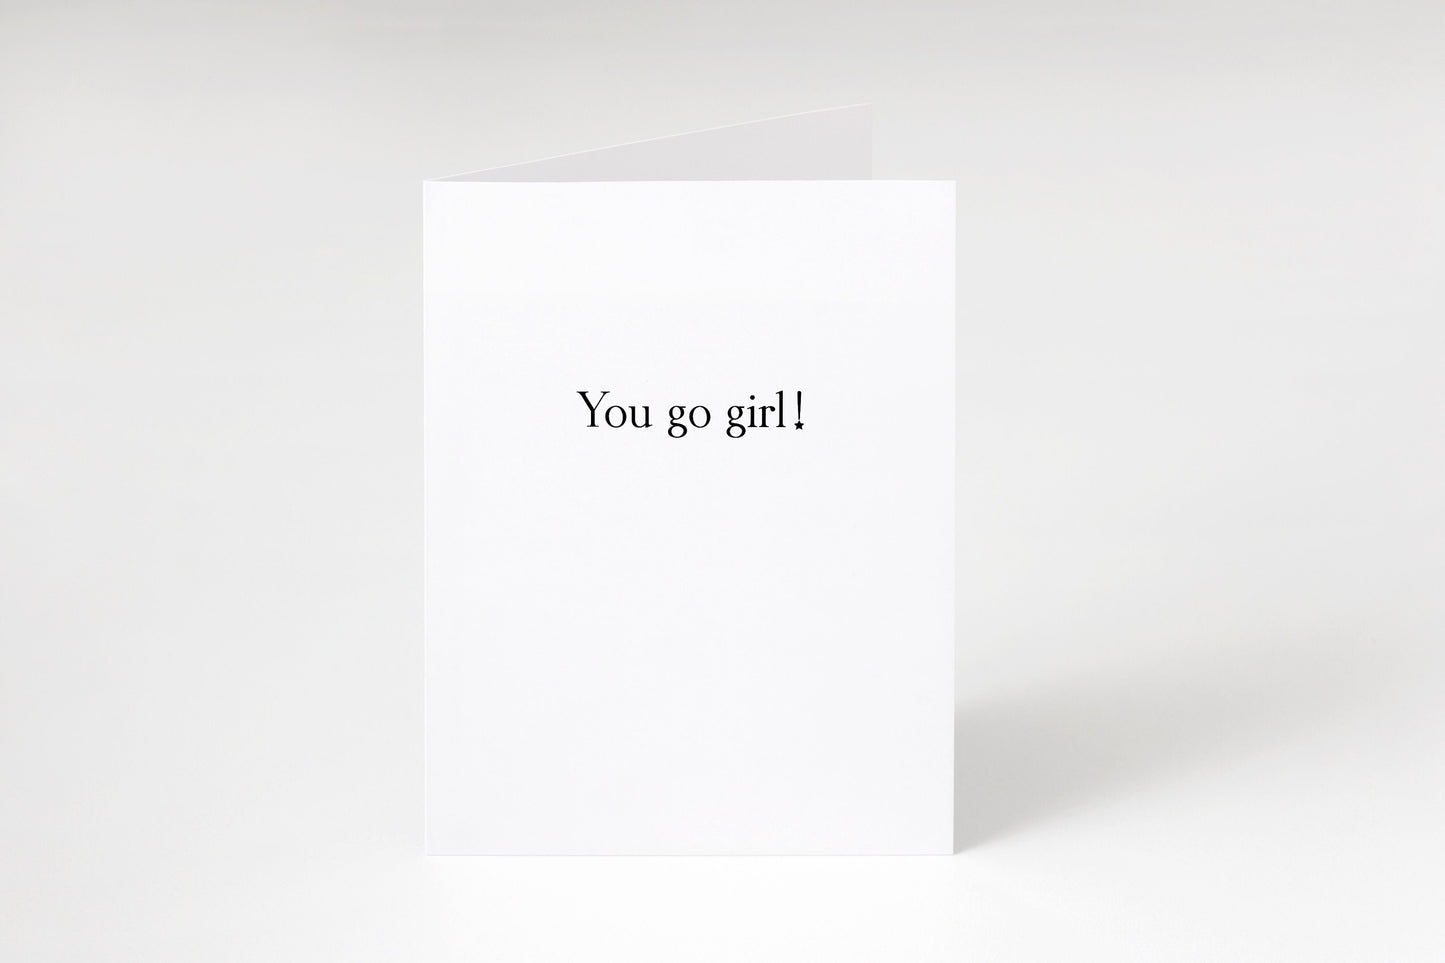 You go girl greeting card,Best friend card,Congratulations card,Encouraging card,Card for friend,Girl power card,Female empowerment,Feminist